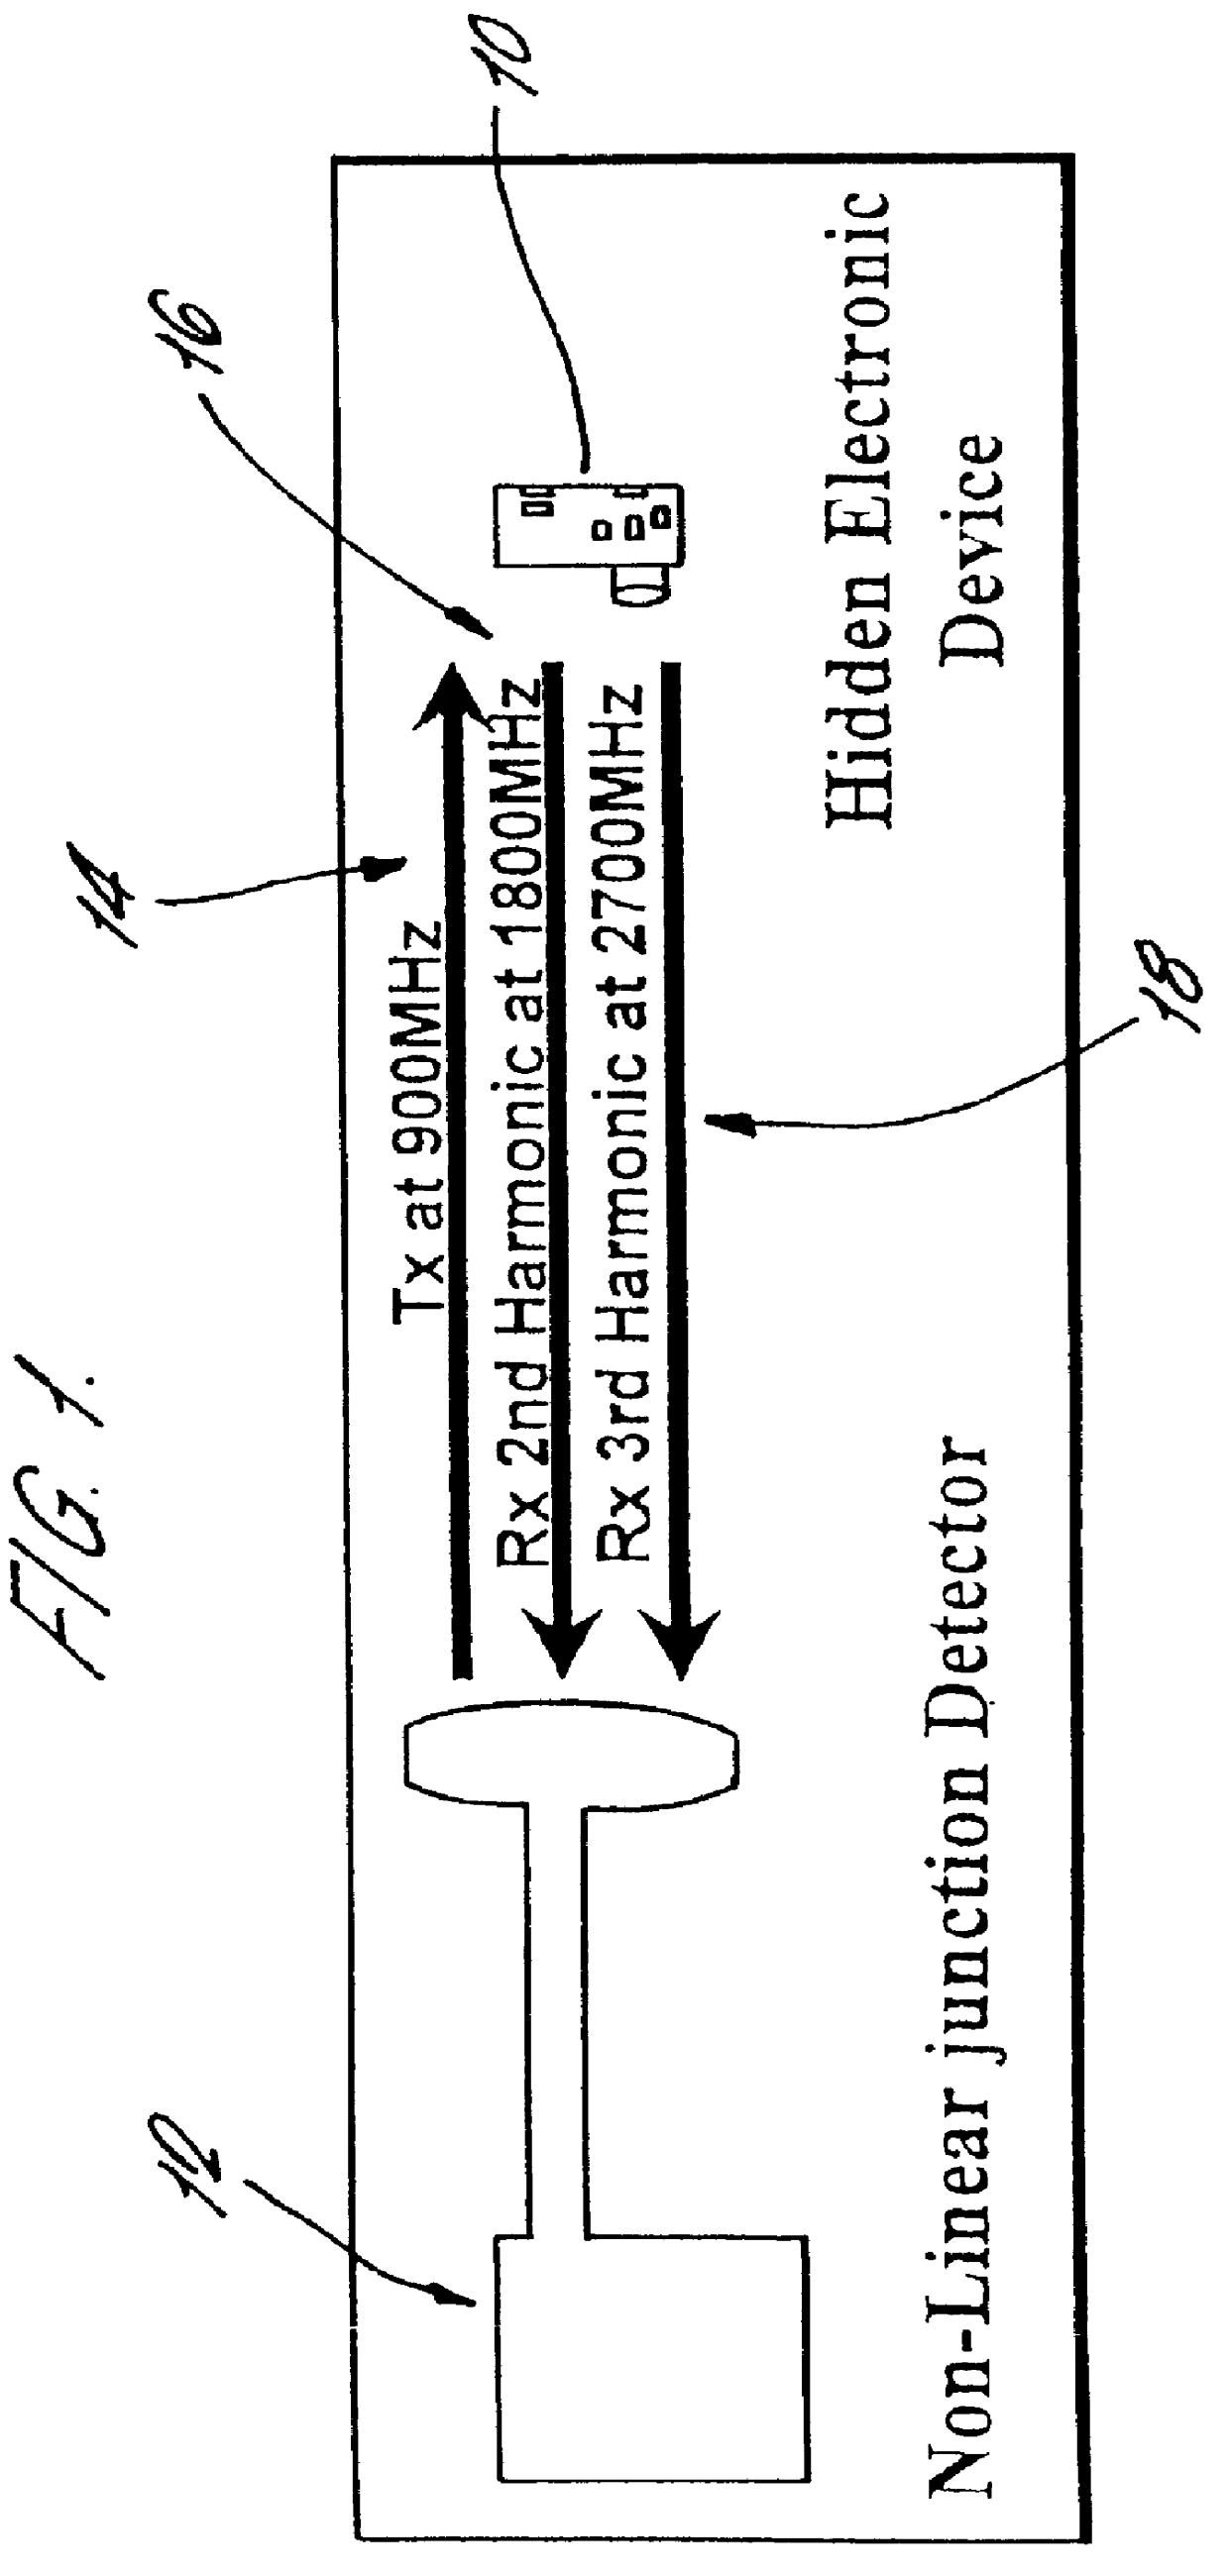 Pulse transmitting non-linear junction detector